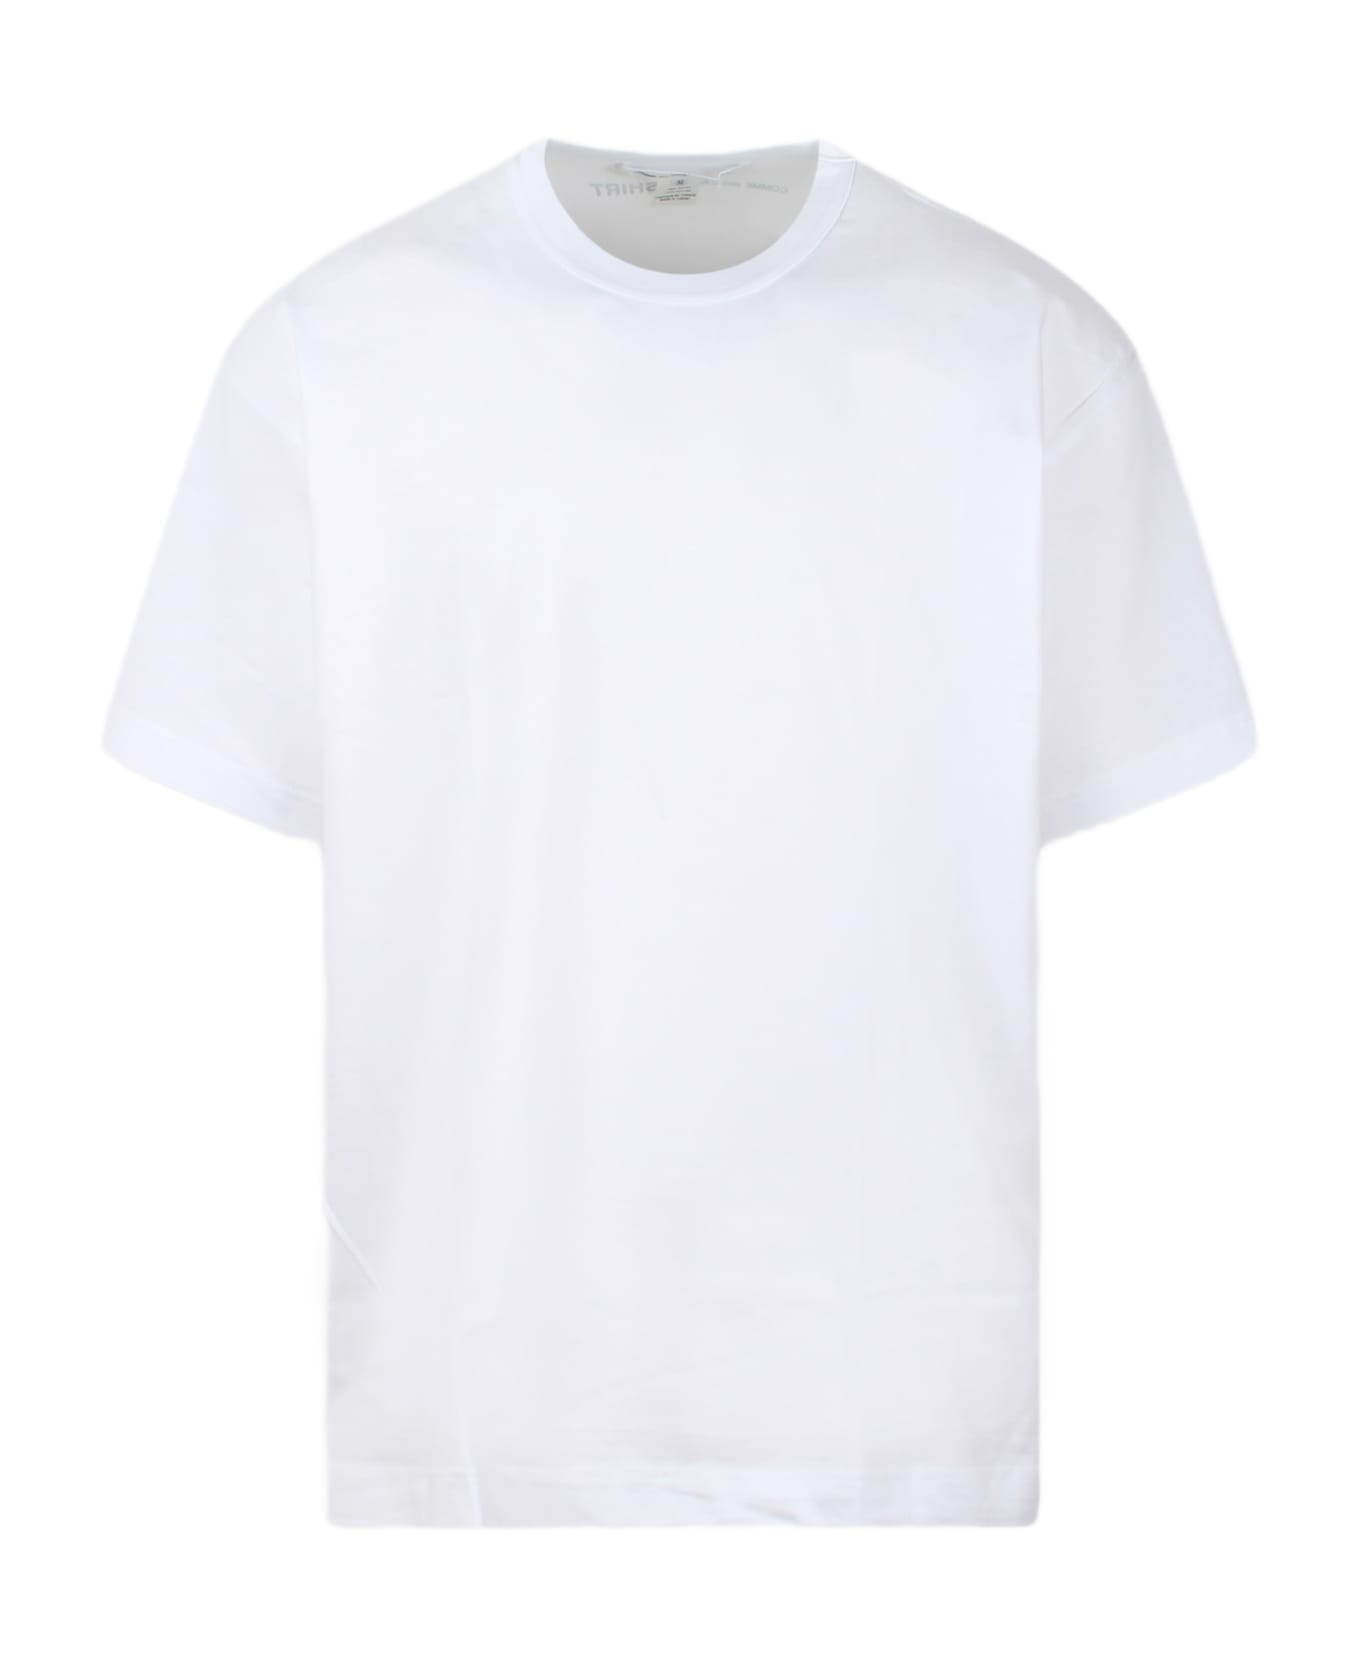 Comme des Garçons Shirt Logo Print T-shirt - White シャツ